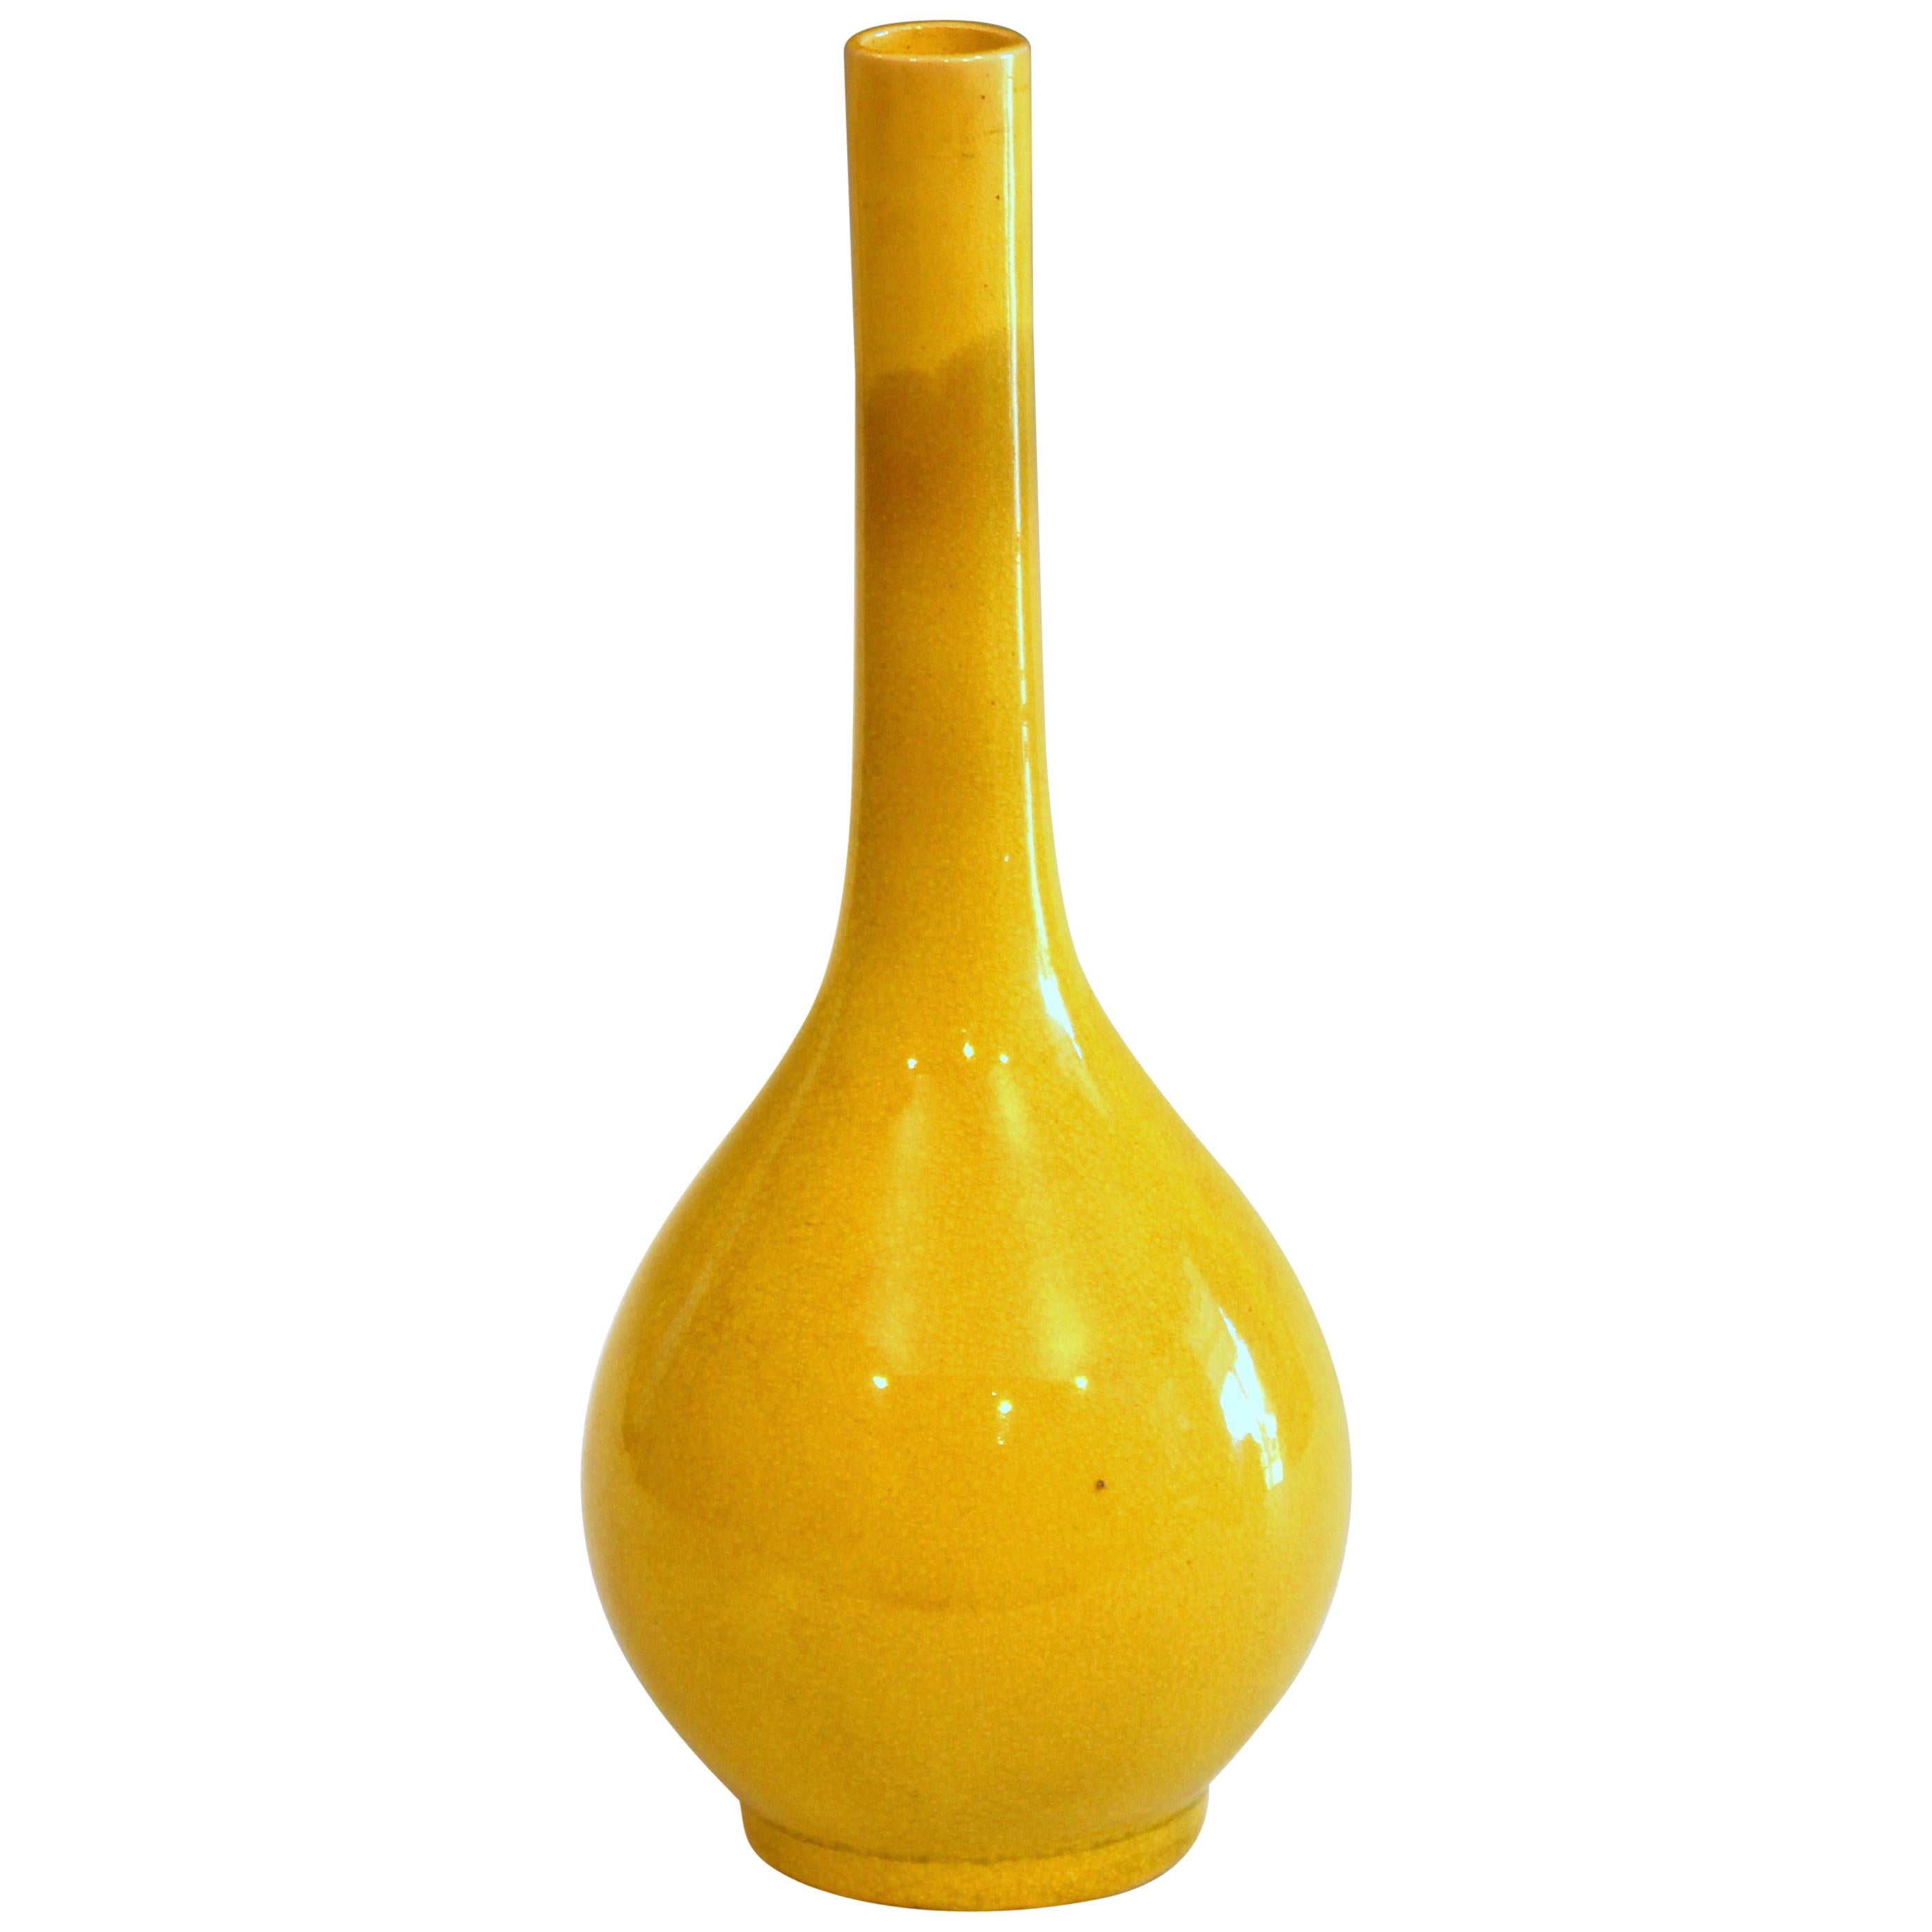 Antique Awaji Pottery Point Bottle Yellow Monochrome Crackle Glaze Vase